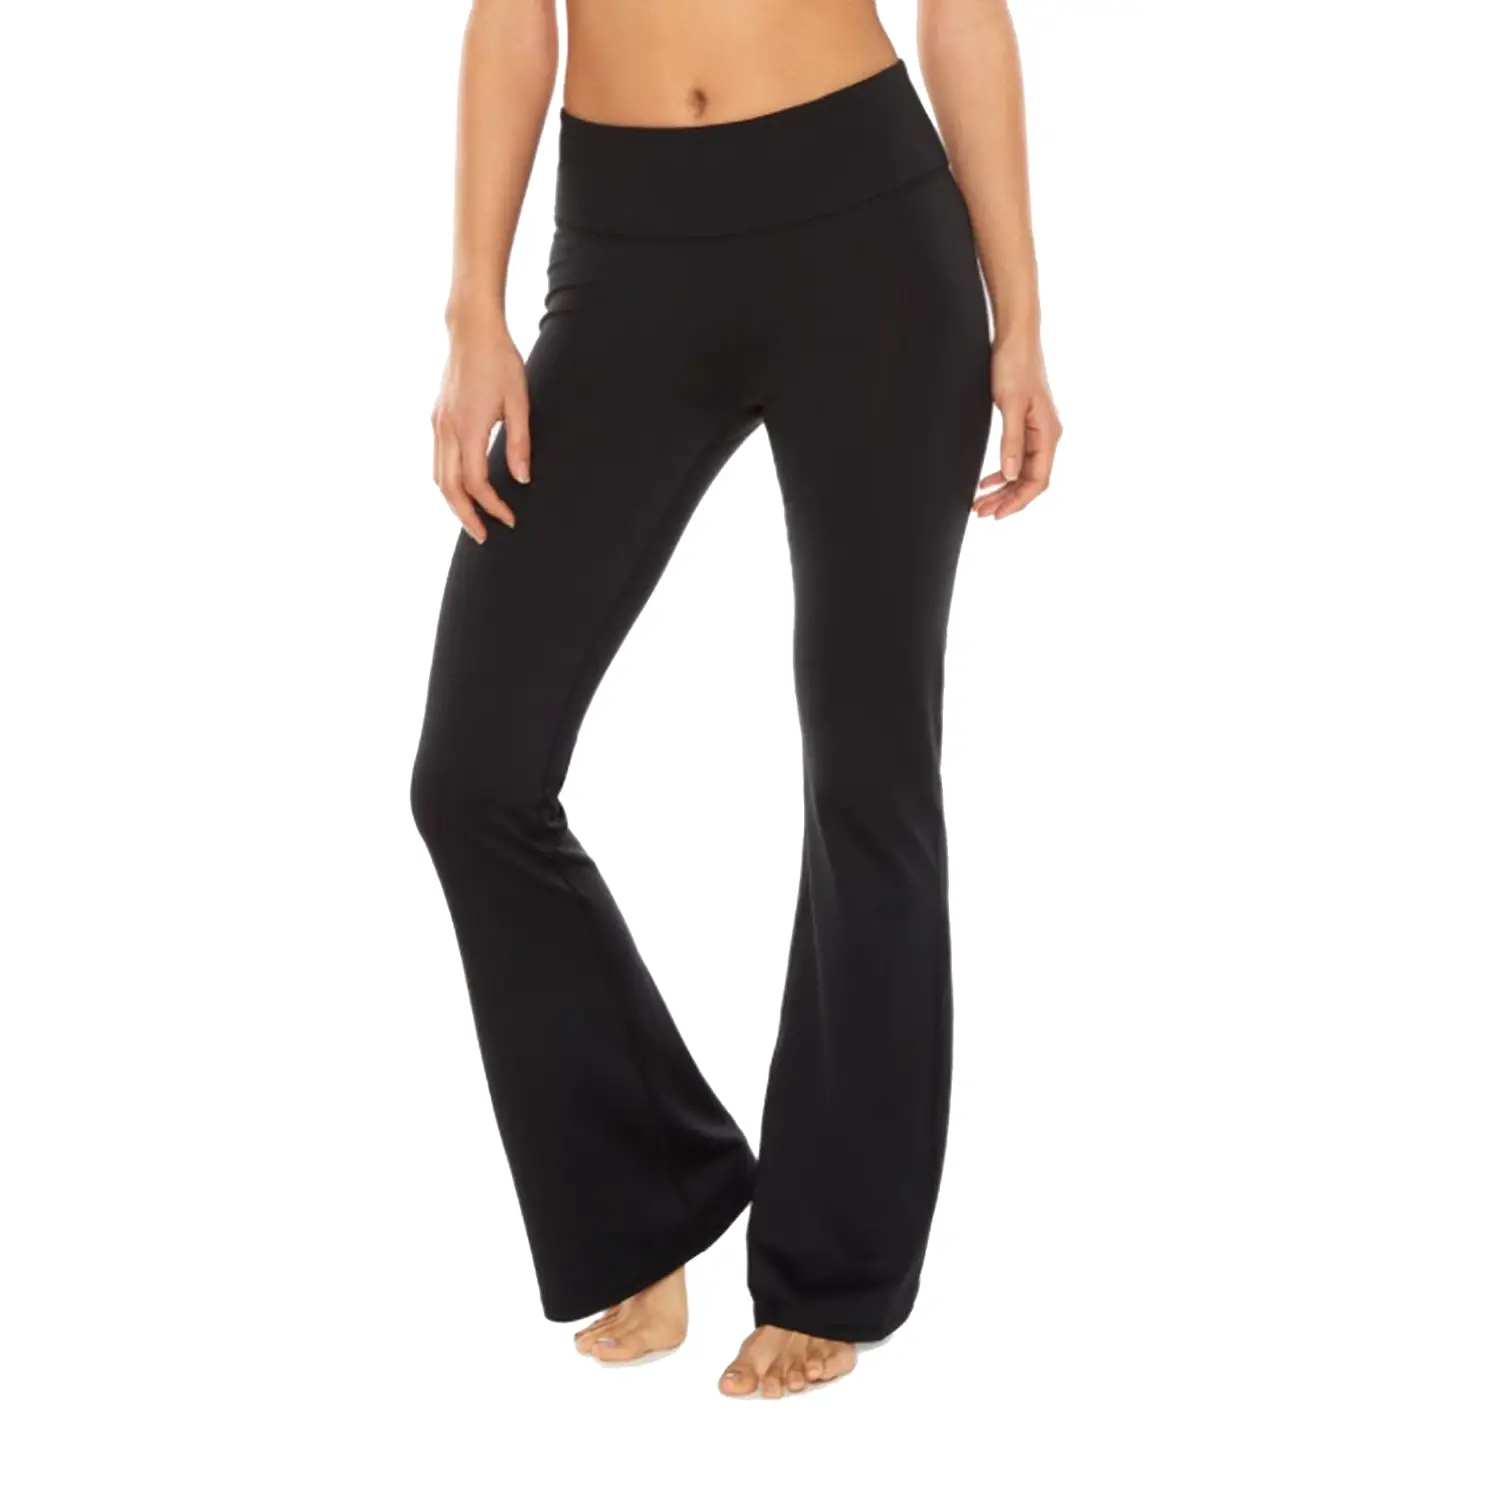 3-Pack Assorted Women's Stretch High Waist Tummy Control Yoga Performance Running Pants